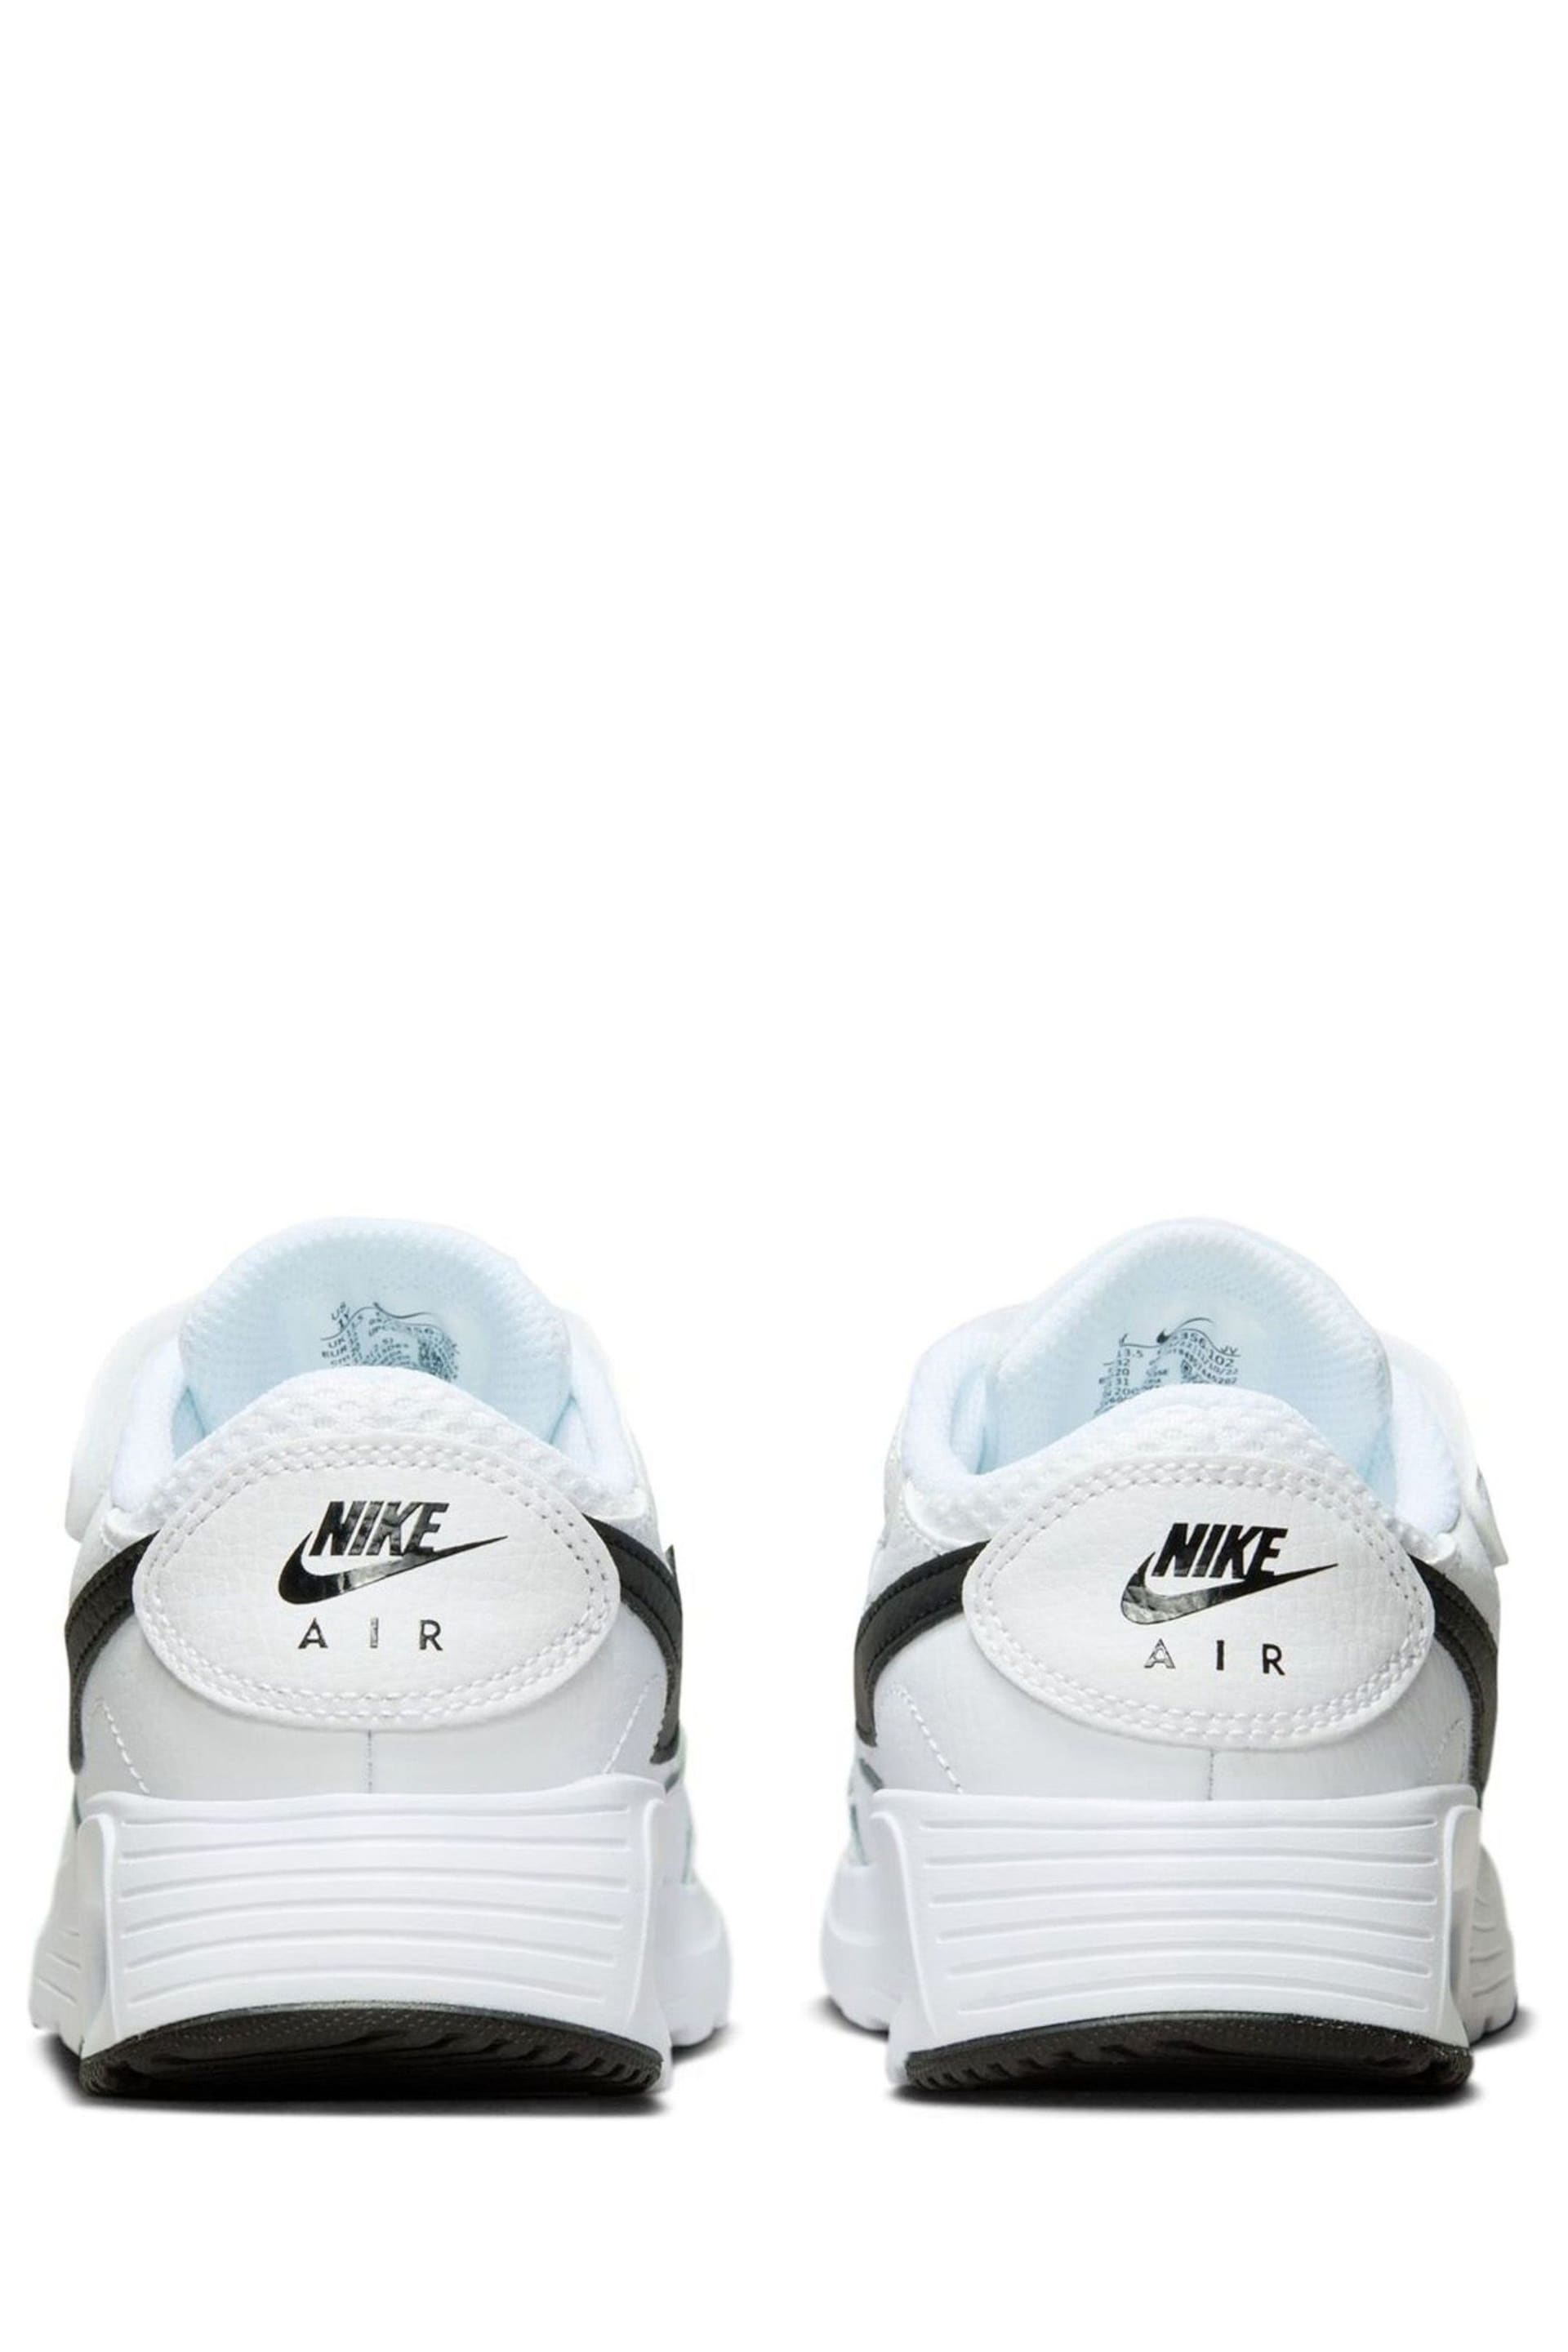 Nike White/Black Junior Air Max SC Trainers - Image 5 of 8